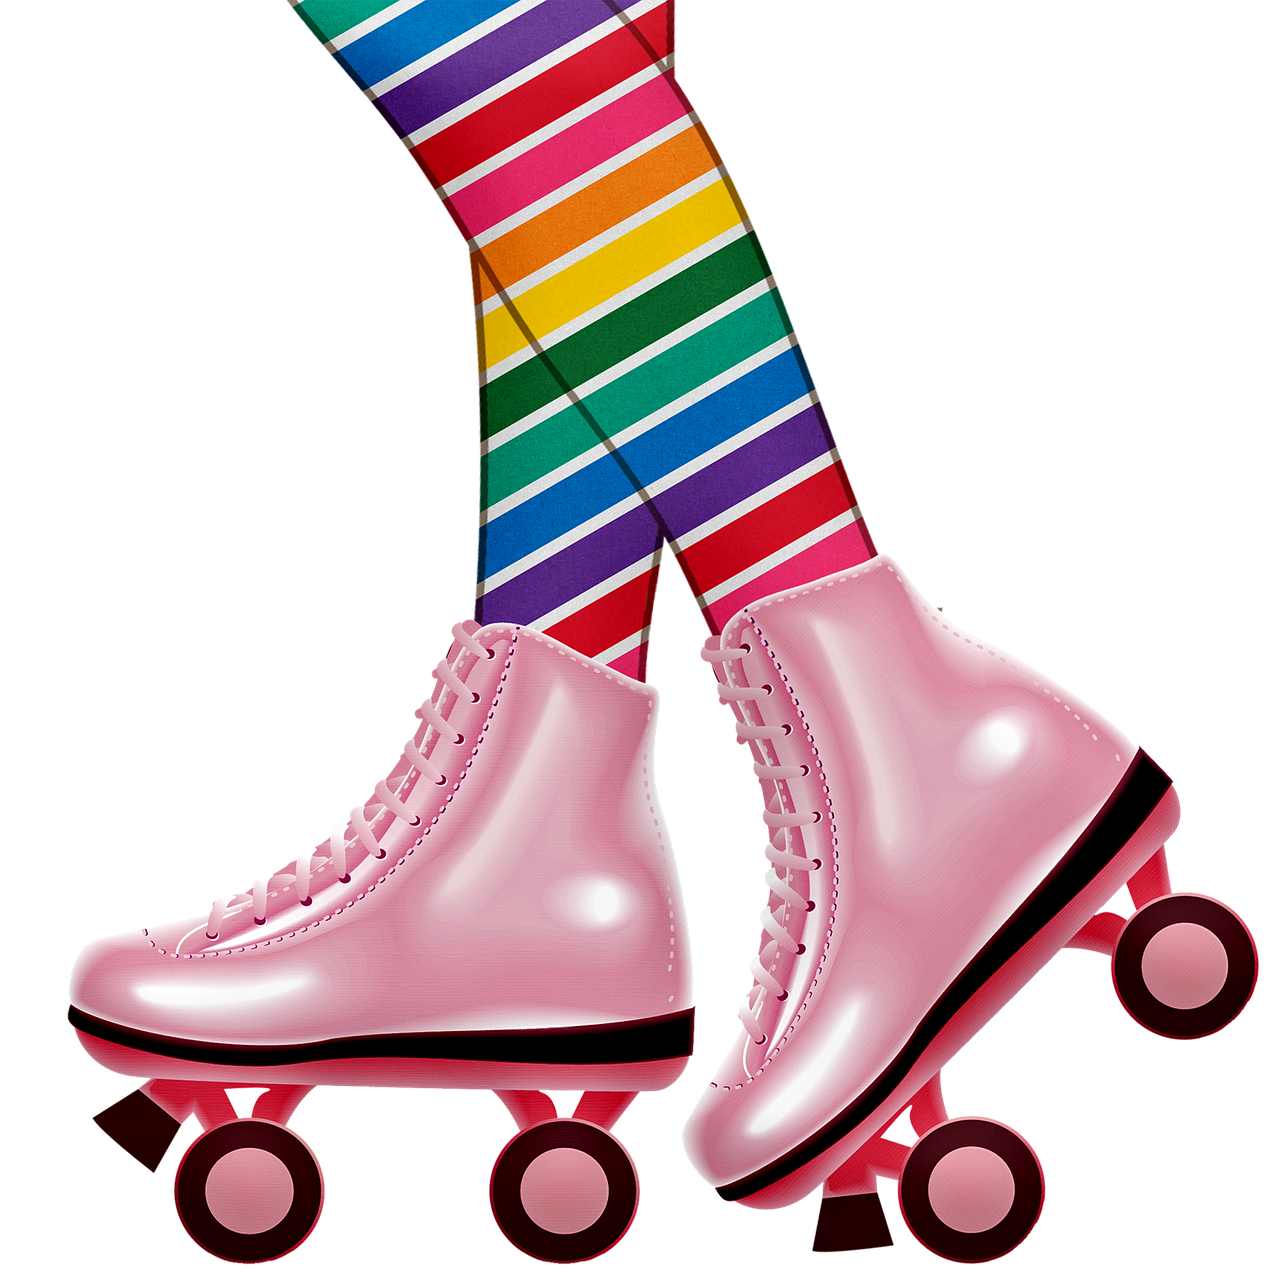 Download free photo of Roller skating legs, roller skating girl ...